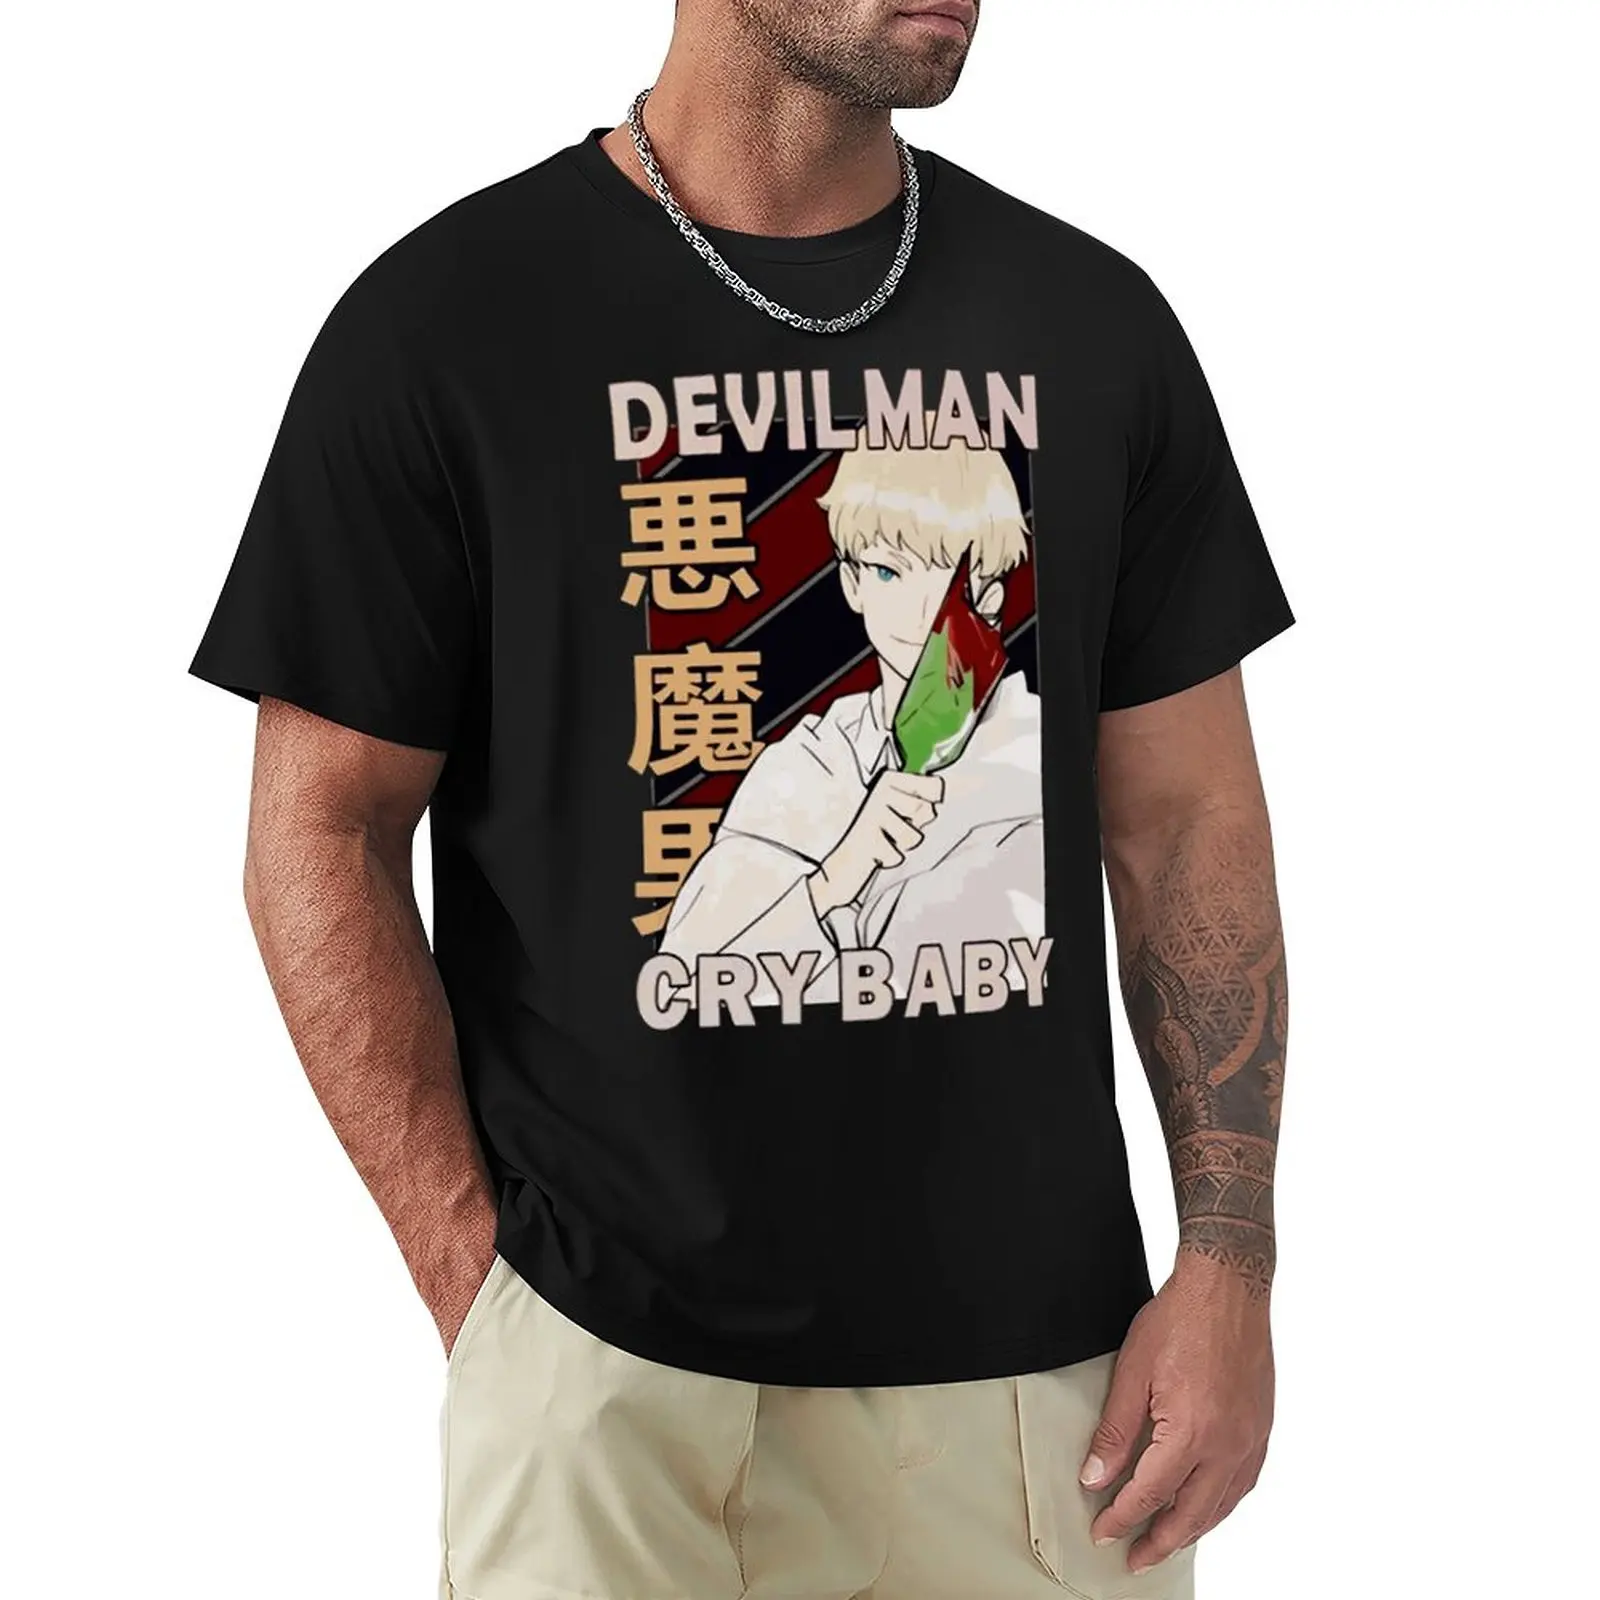 Devilman Crybaby Ryo Asuka Akira Fudo T Shirts Men Cotton Novelty T-Shirt Round Collar Tee Shirt Short Sleeve Clothes Present